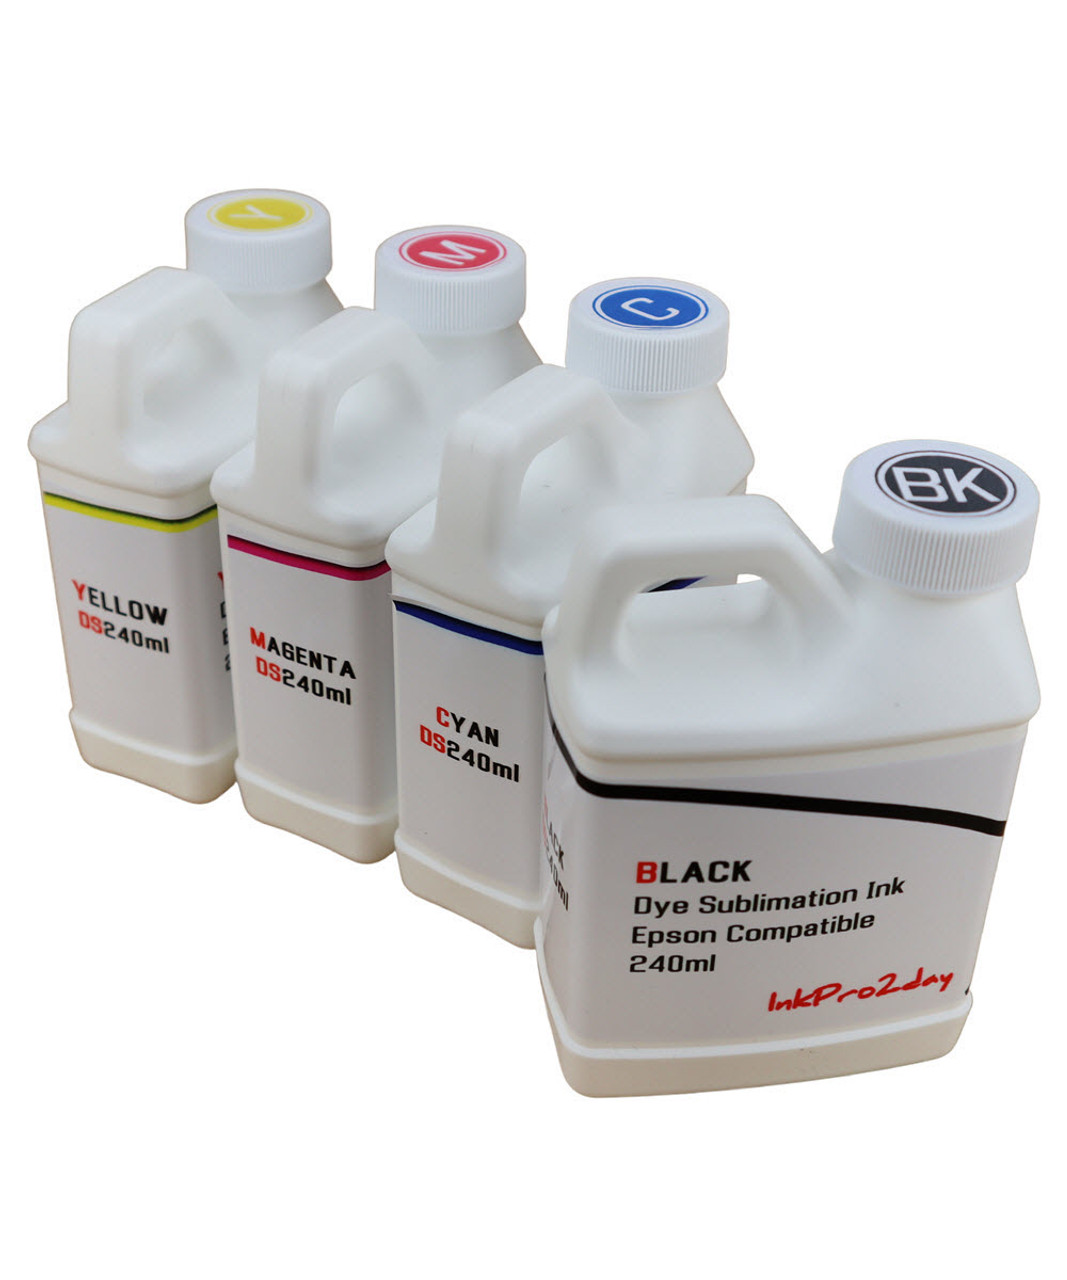 Dye Sublimation Ink For Epson Workforce Pro Wf 7310 Wf 7820 Wf 7840 Printers 4 240ml Bottles 1254